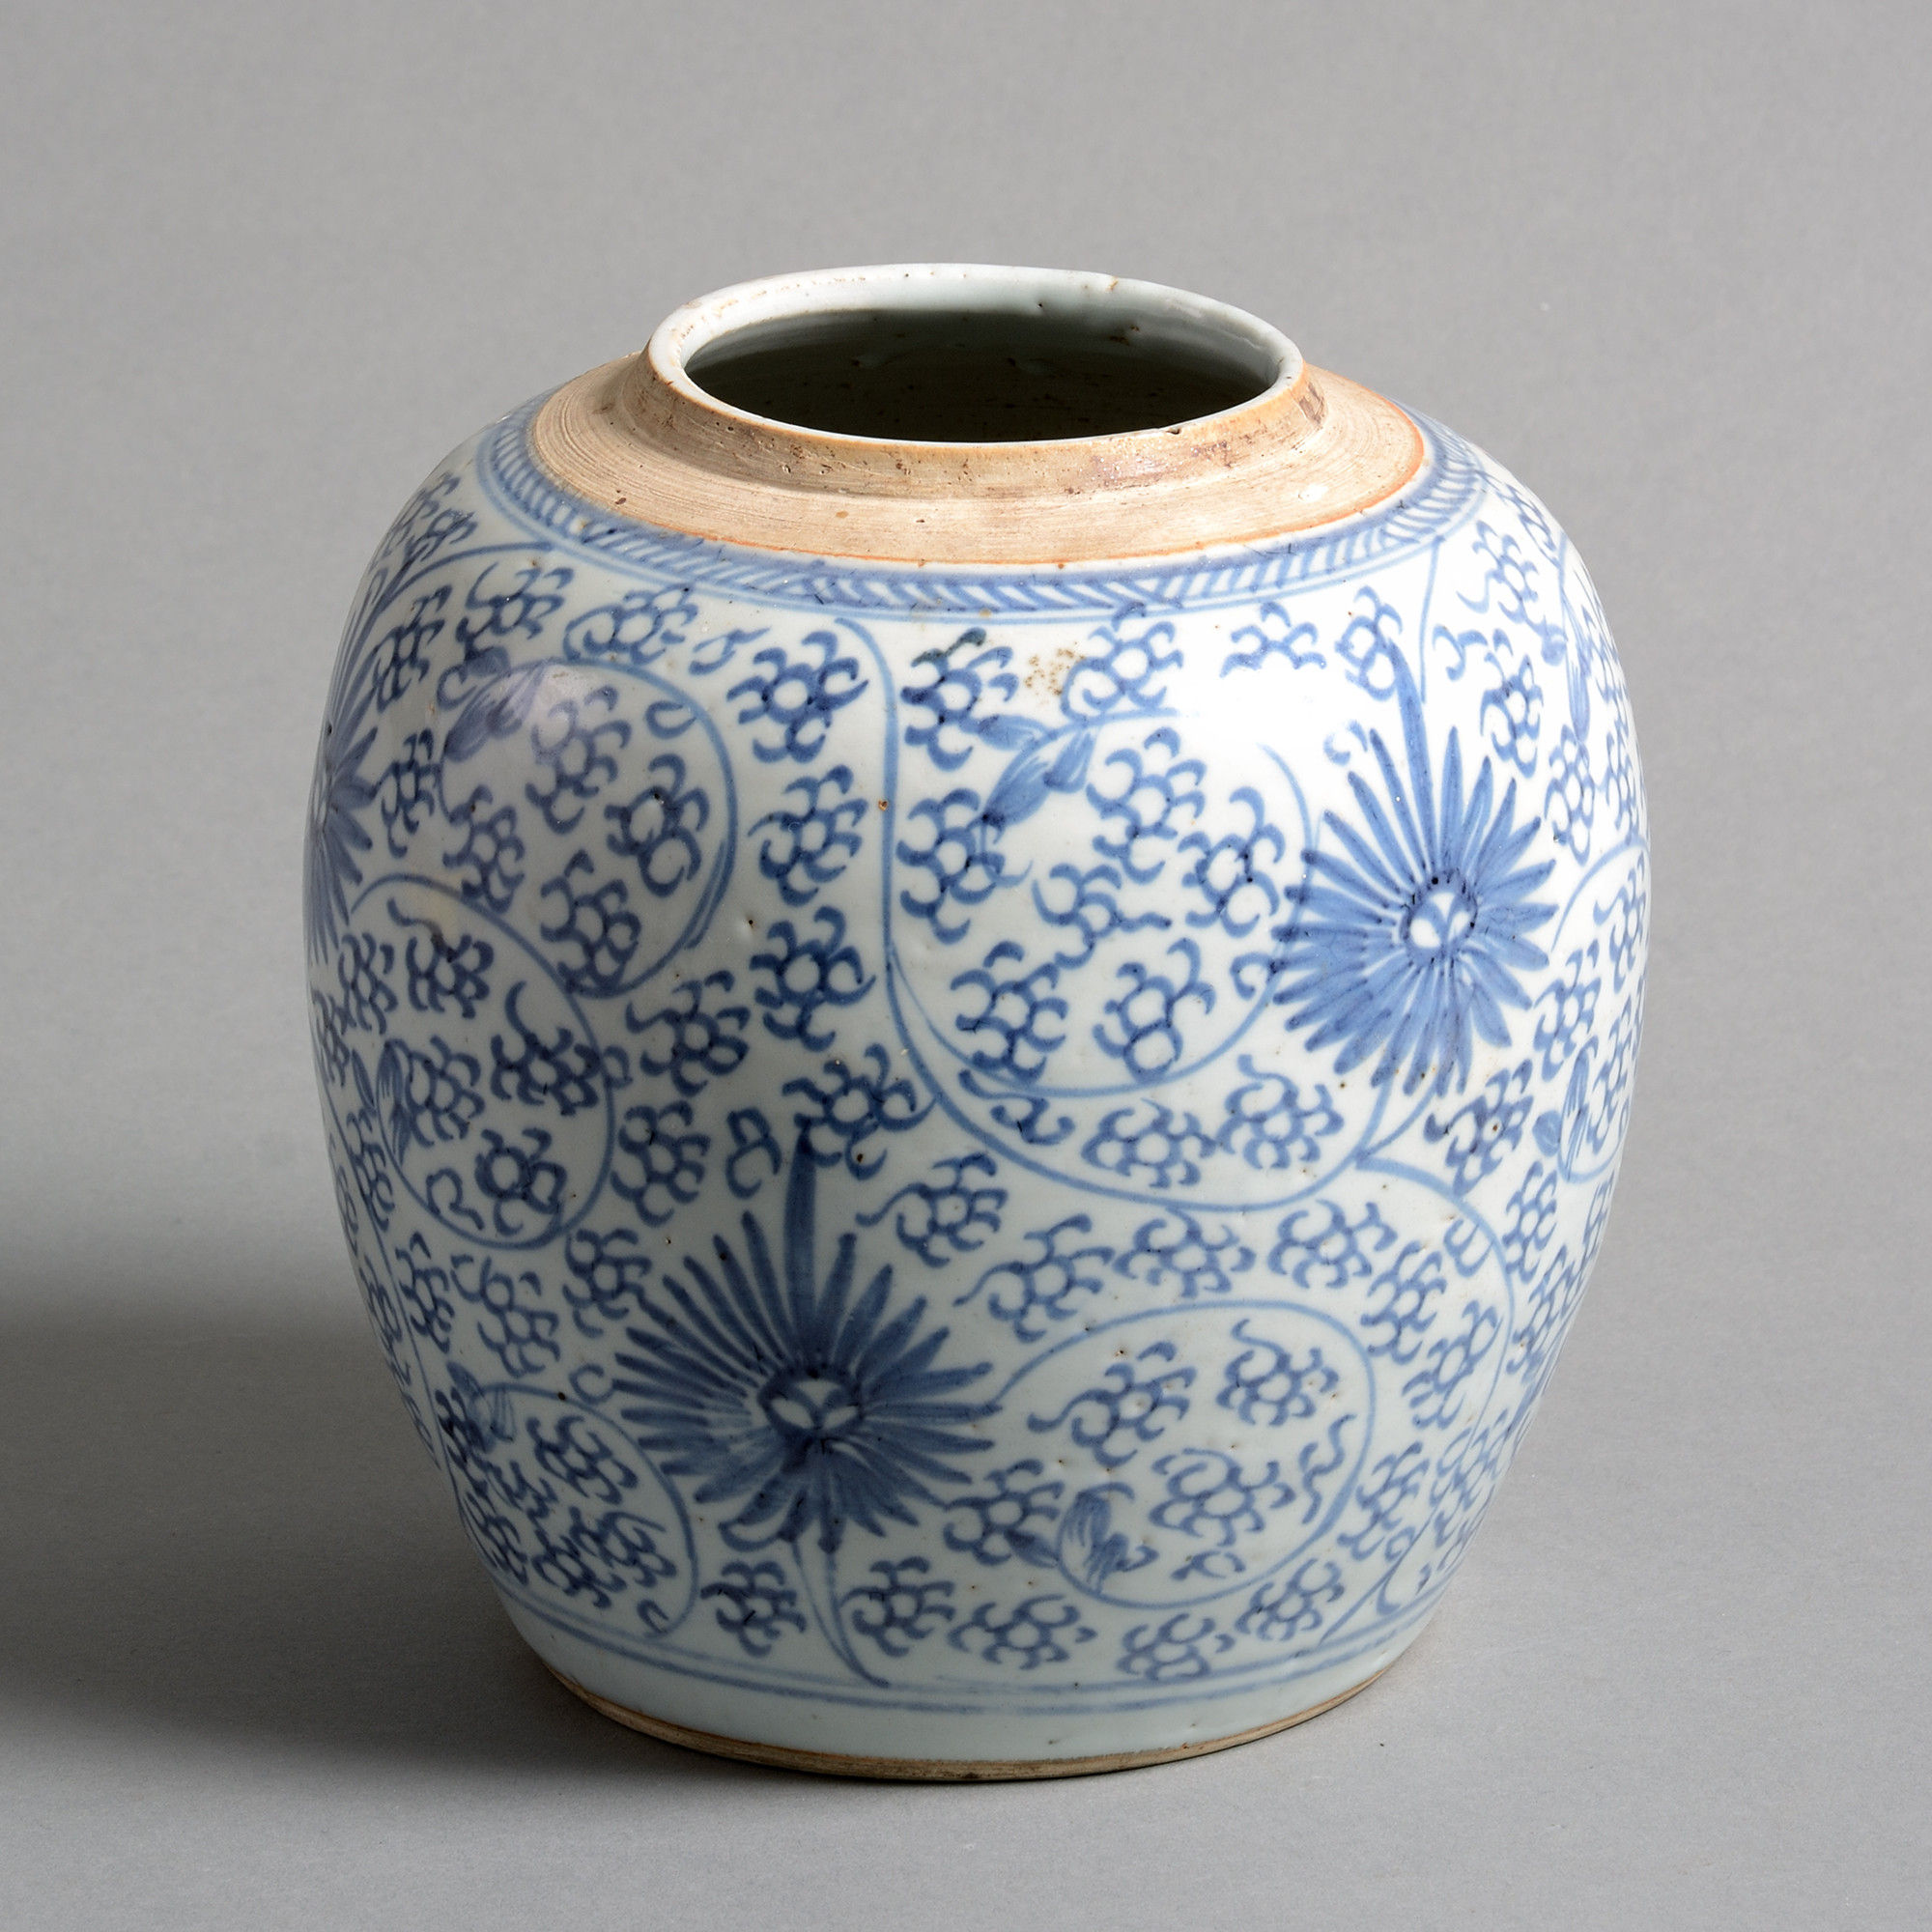 Details about   Qing dynasty jingdezhen folk kiln handmade blue and white porcelain flower pot 